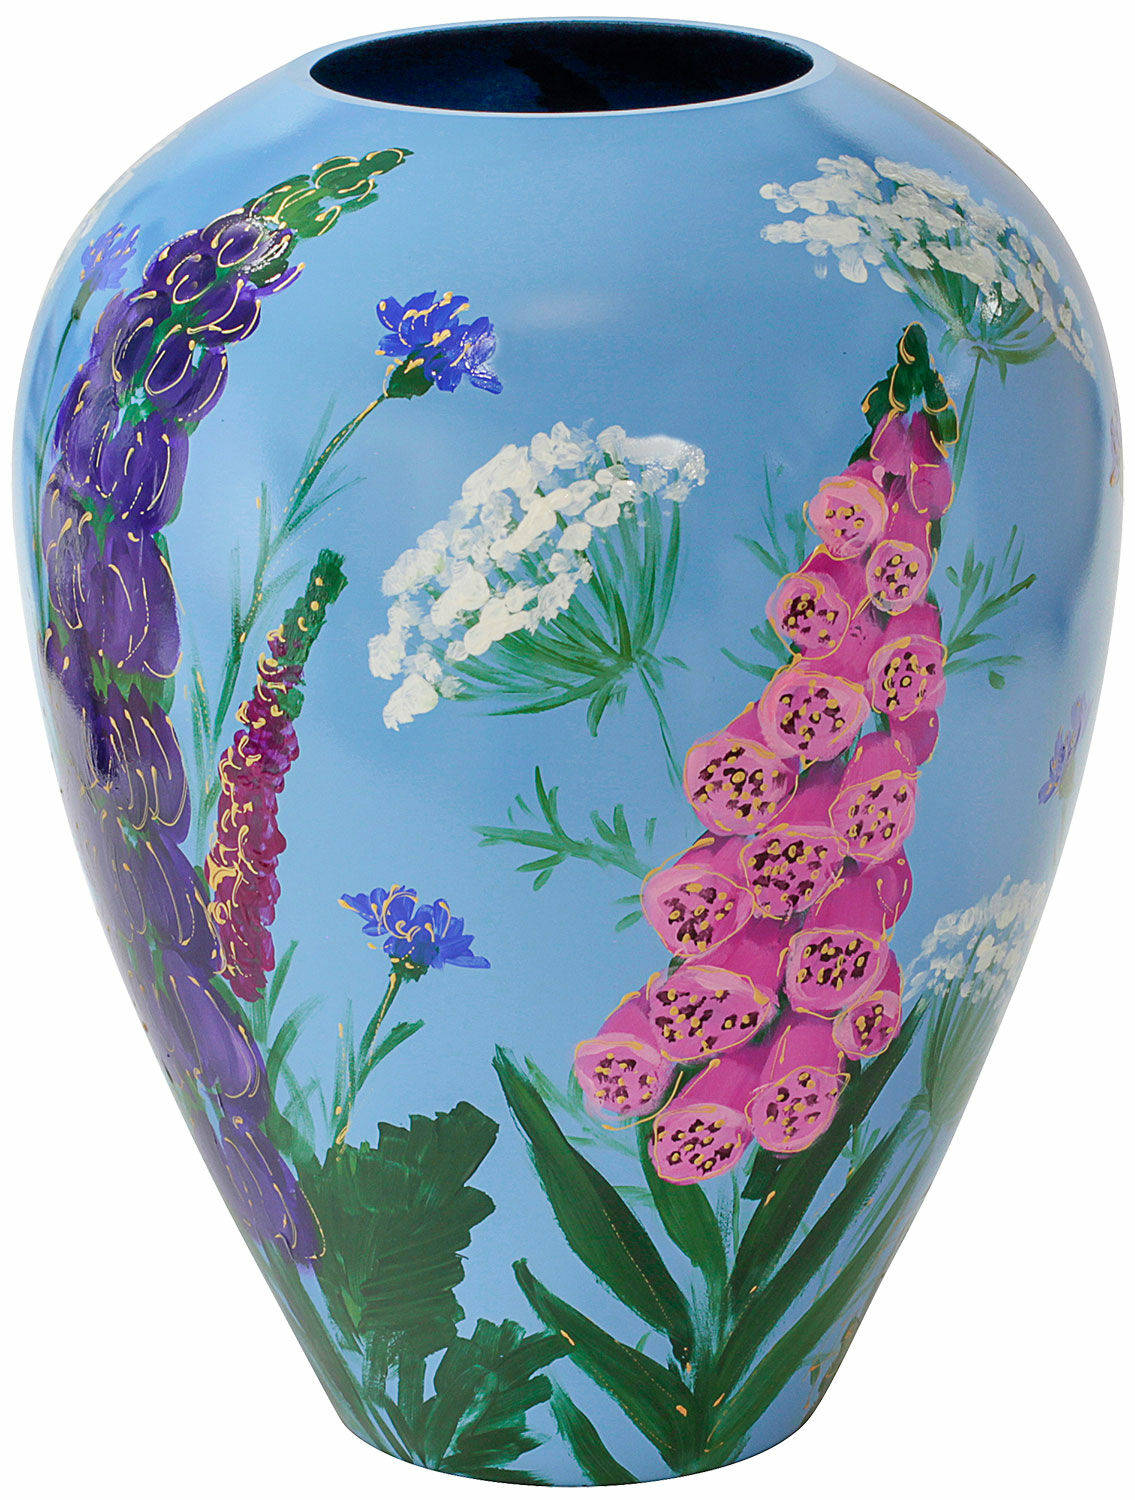 Glass vase "Flower Meadow Bouquet" by Milou van Schaik Martinet